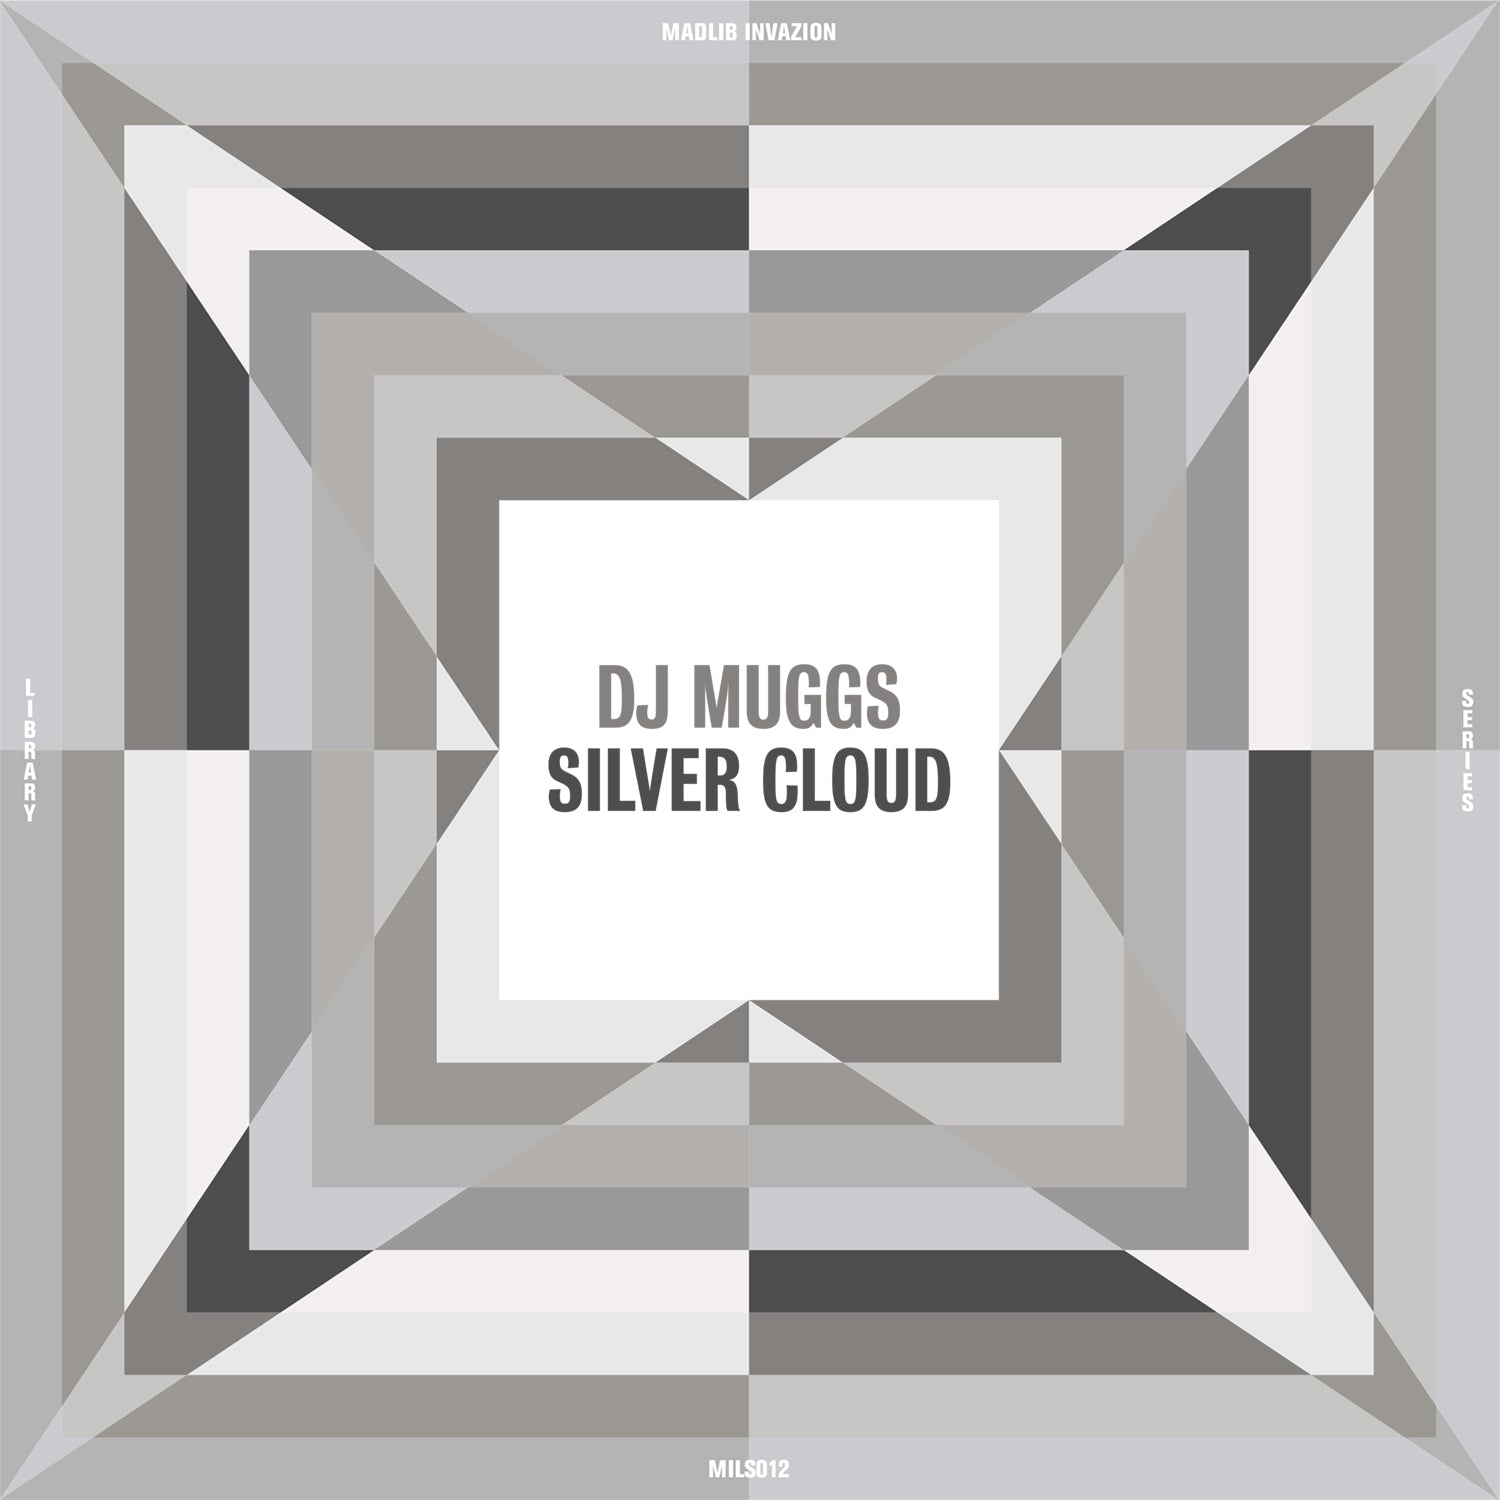 DJ Muggs - Silver Cloud (Madlib Invazion Music Library Series #12)